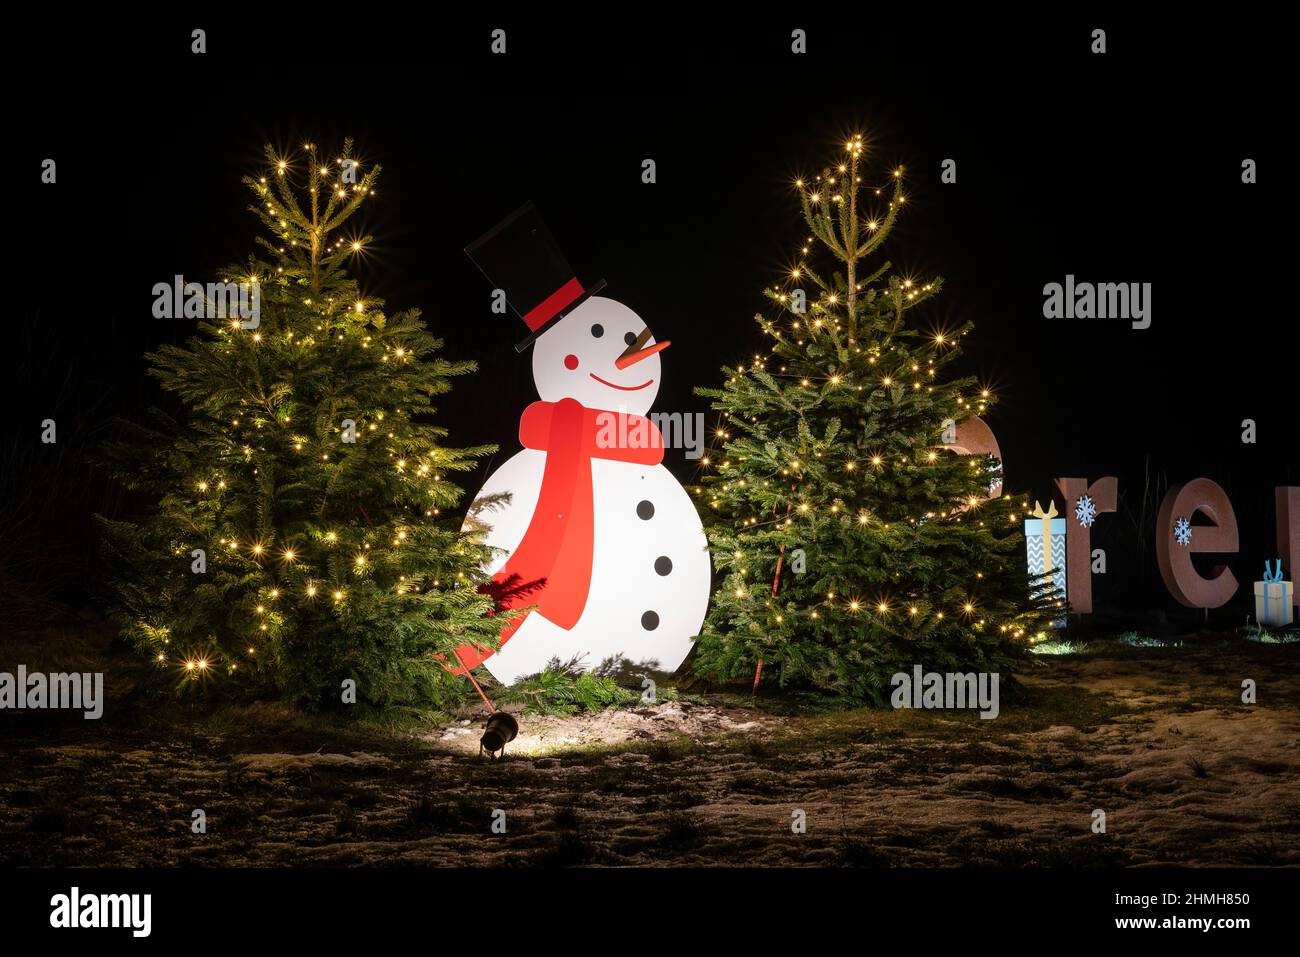 Germany, Mecklenburg-Western Pomerania, Prerow, illuminated snowman, Christmas trees Stock Photo